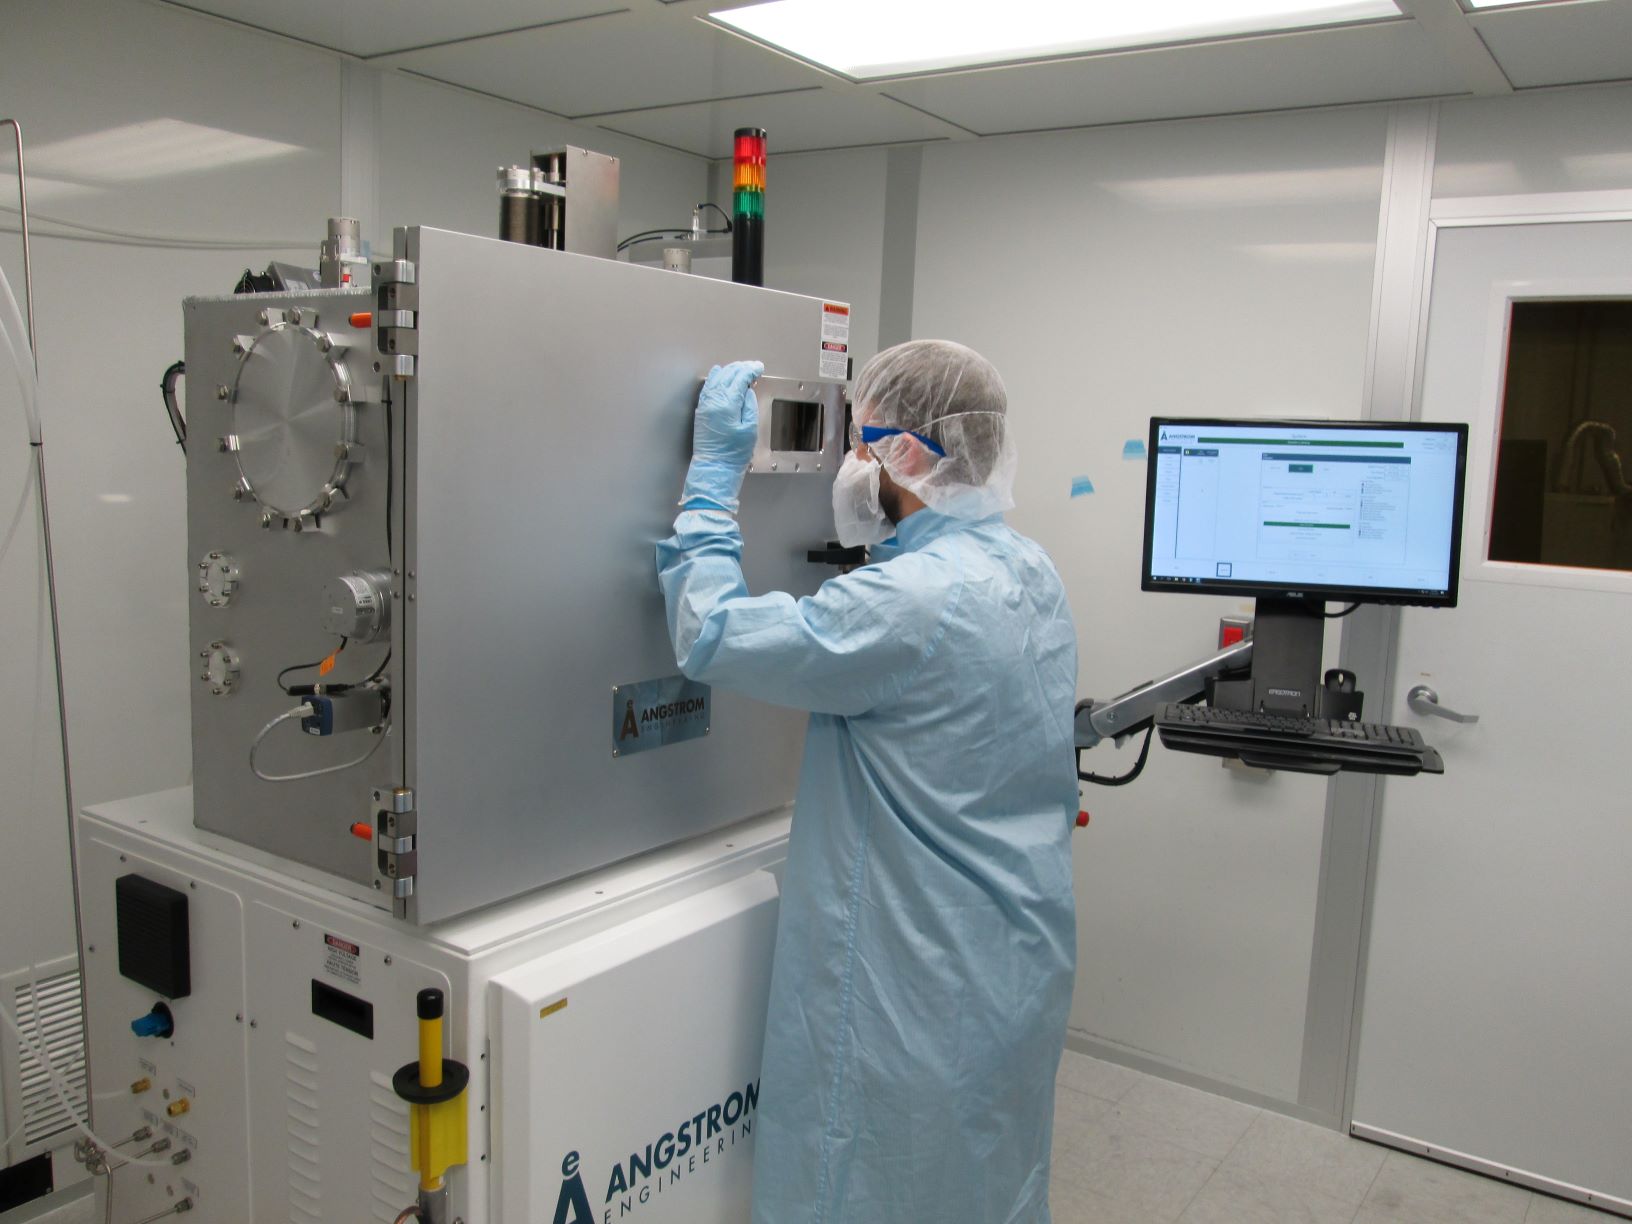 A user operating the EvoVac evaporator